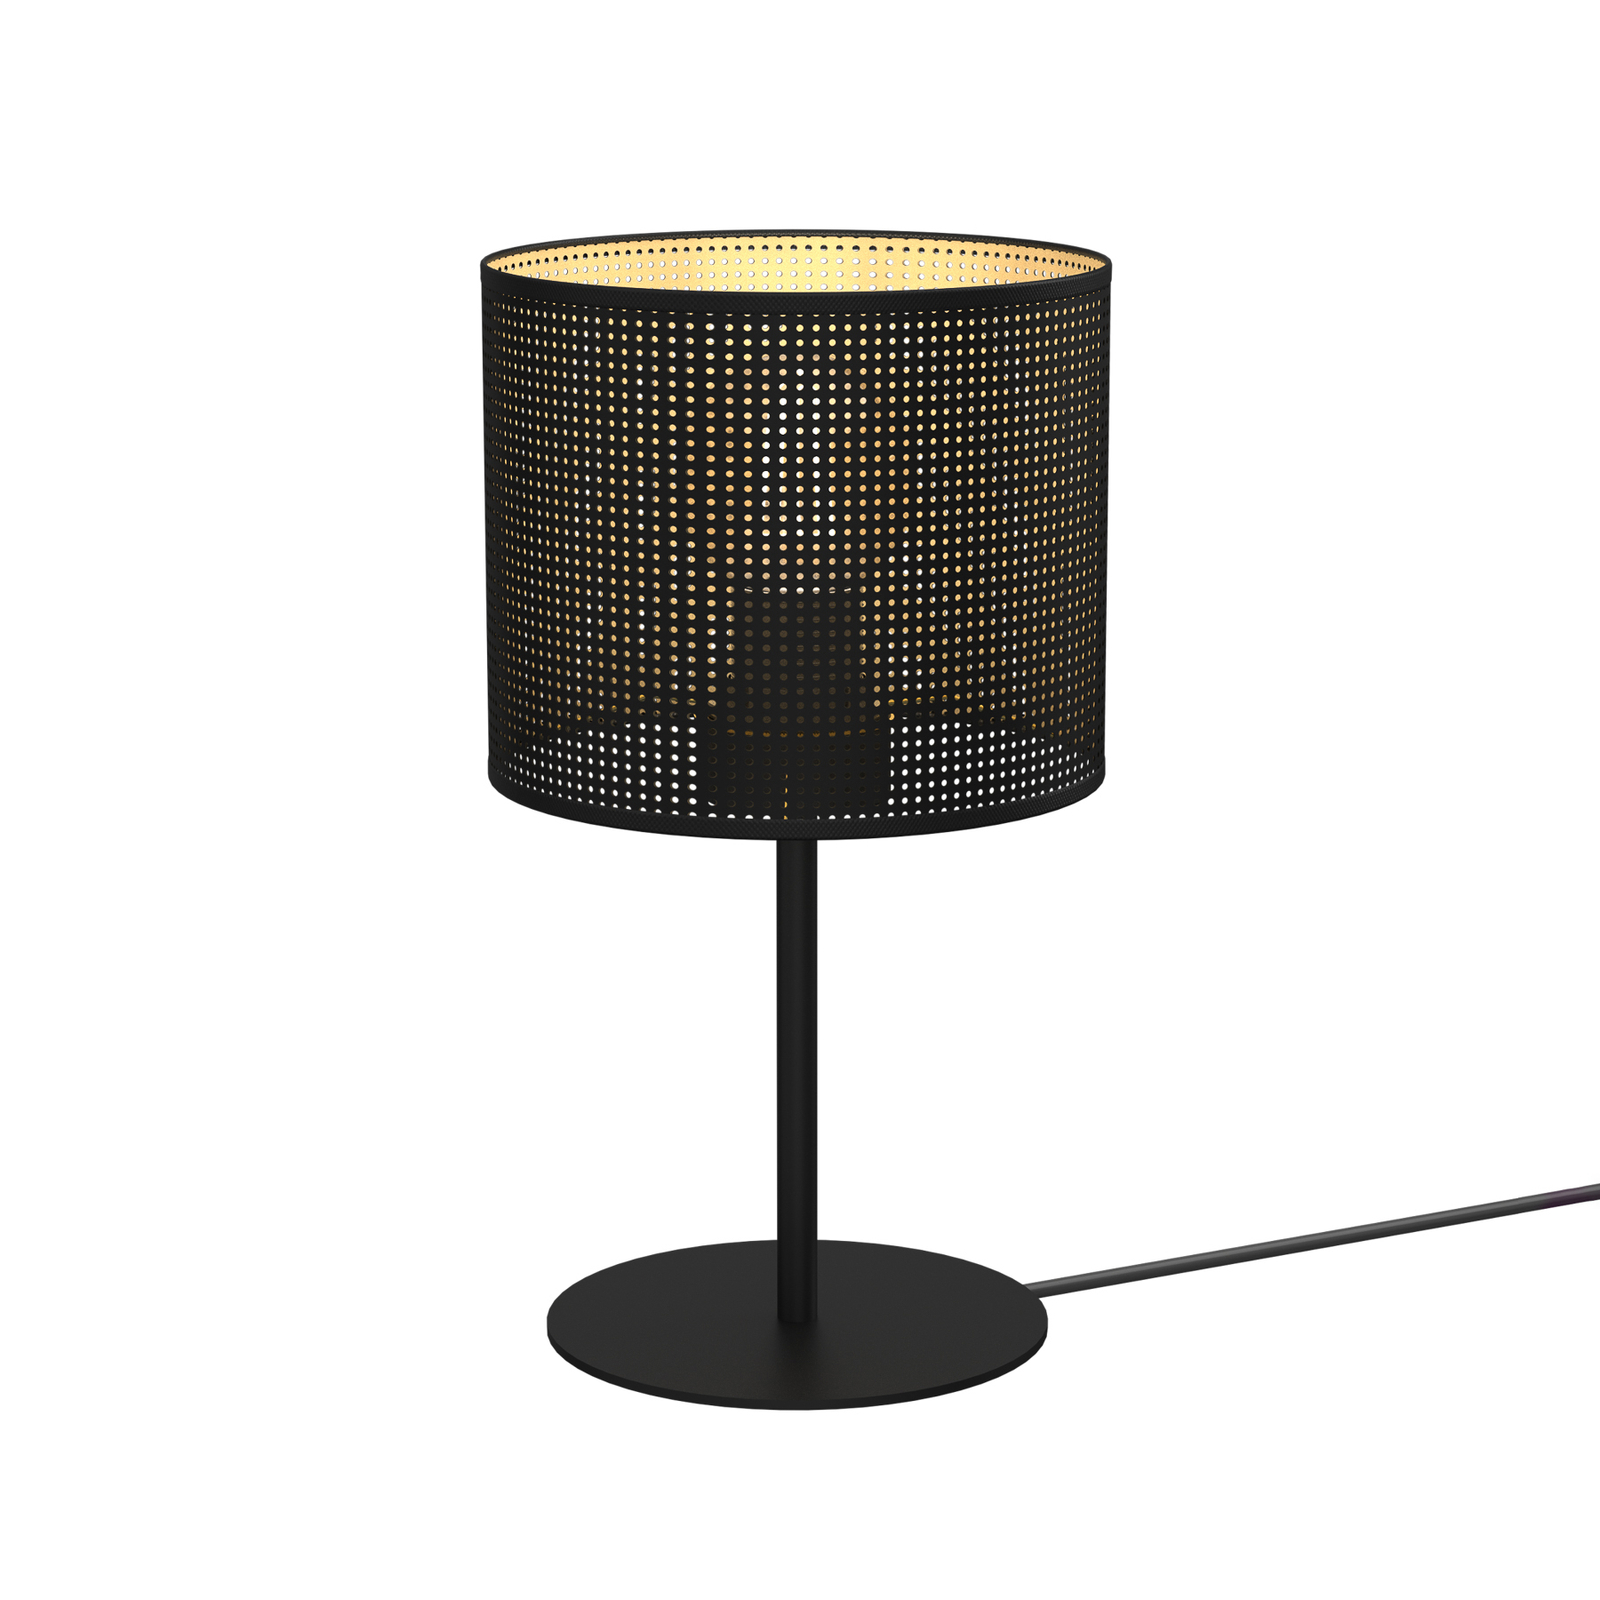 Jovin-pöytälamppu korkeus 34cm, musta/kulta